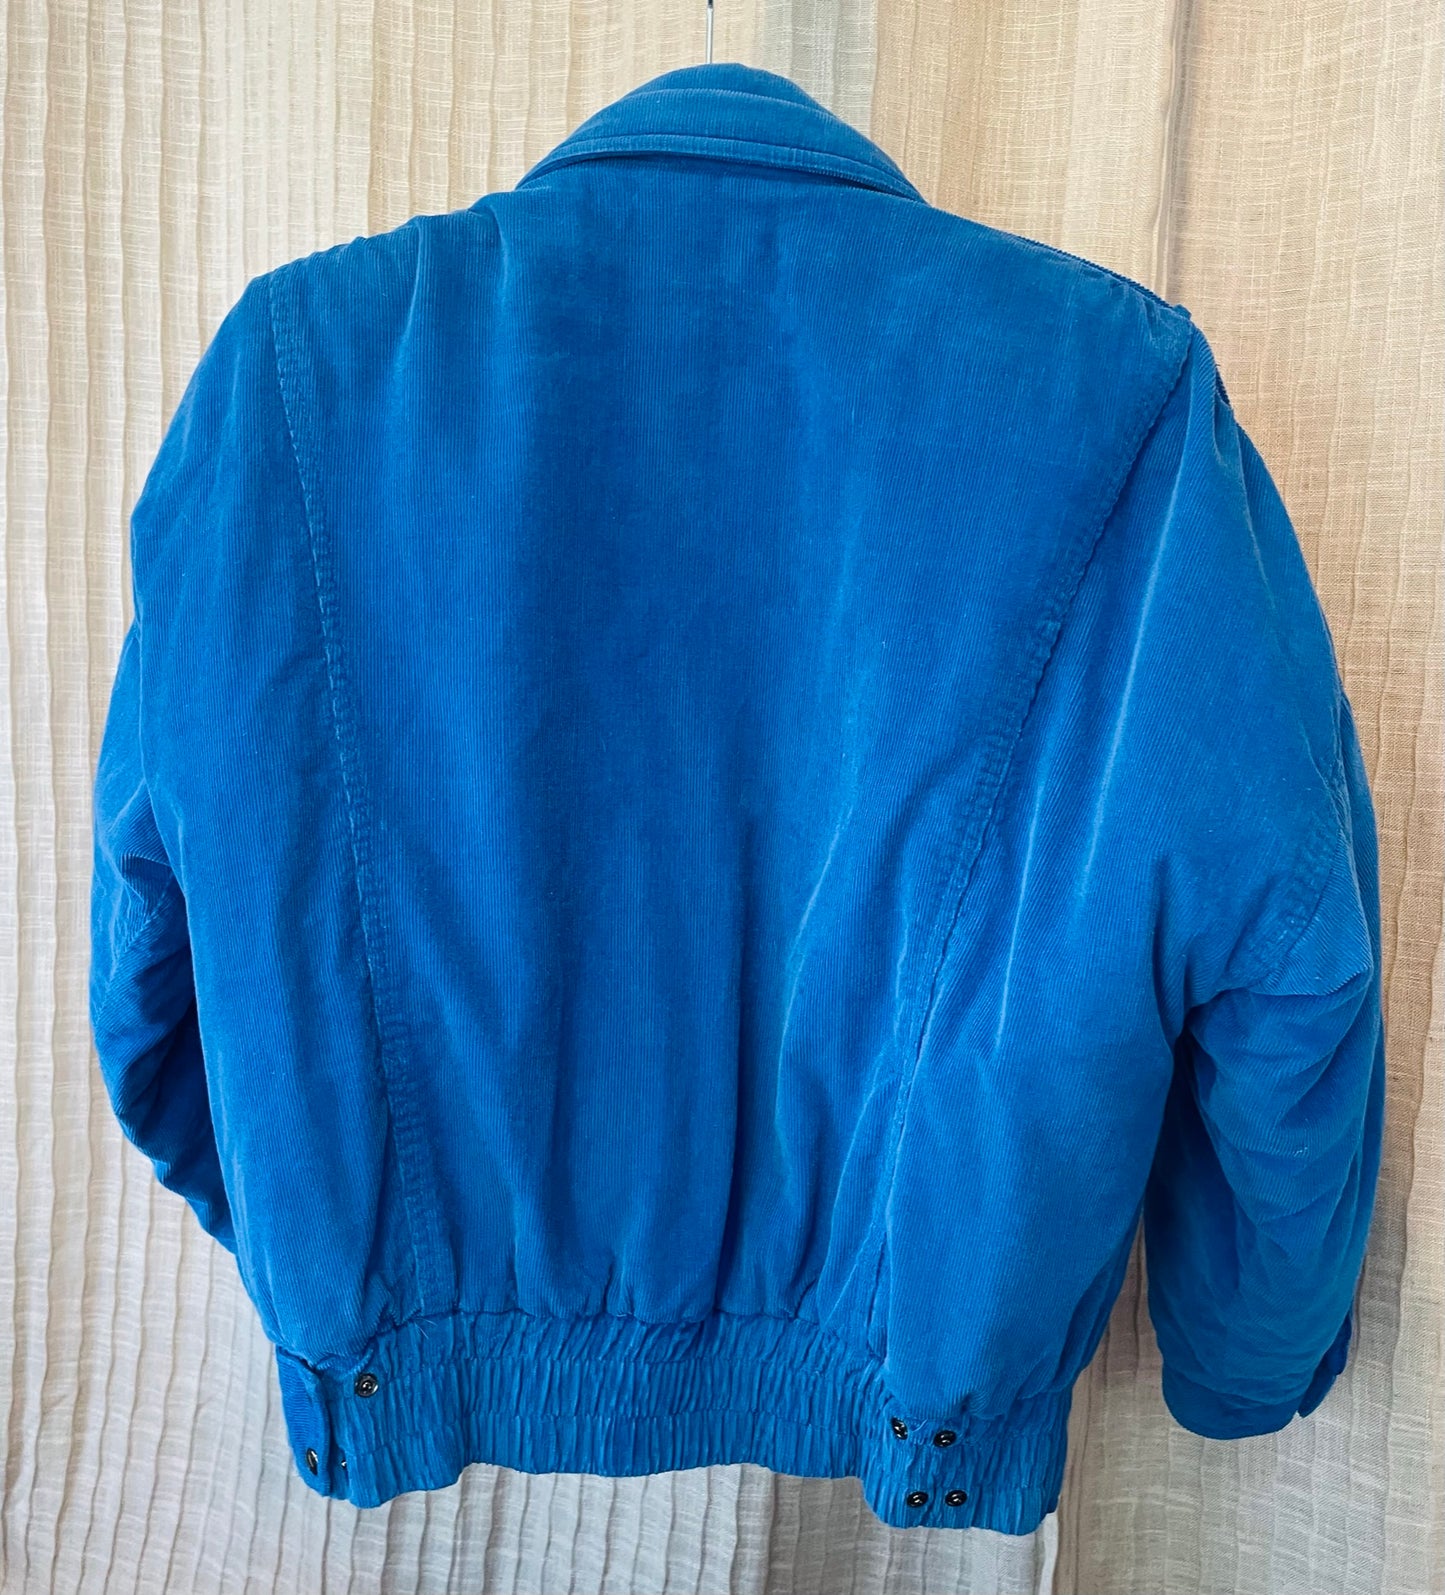 Andy Johns Vintage Size Medium Corduroy Jacket Altered Random